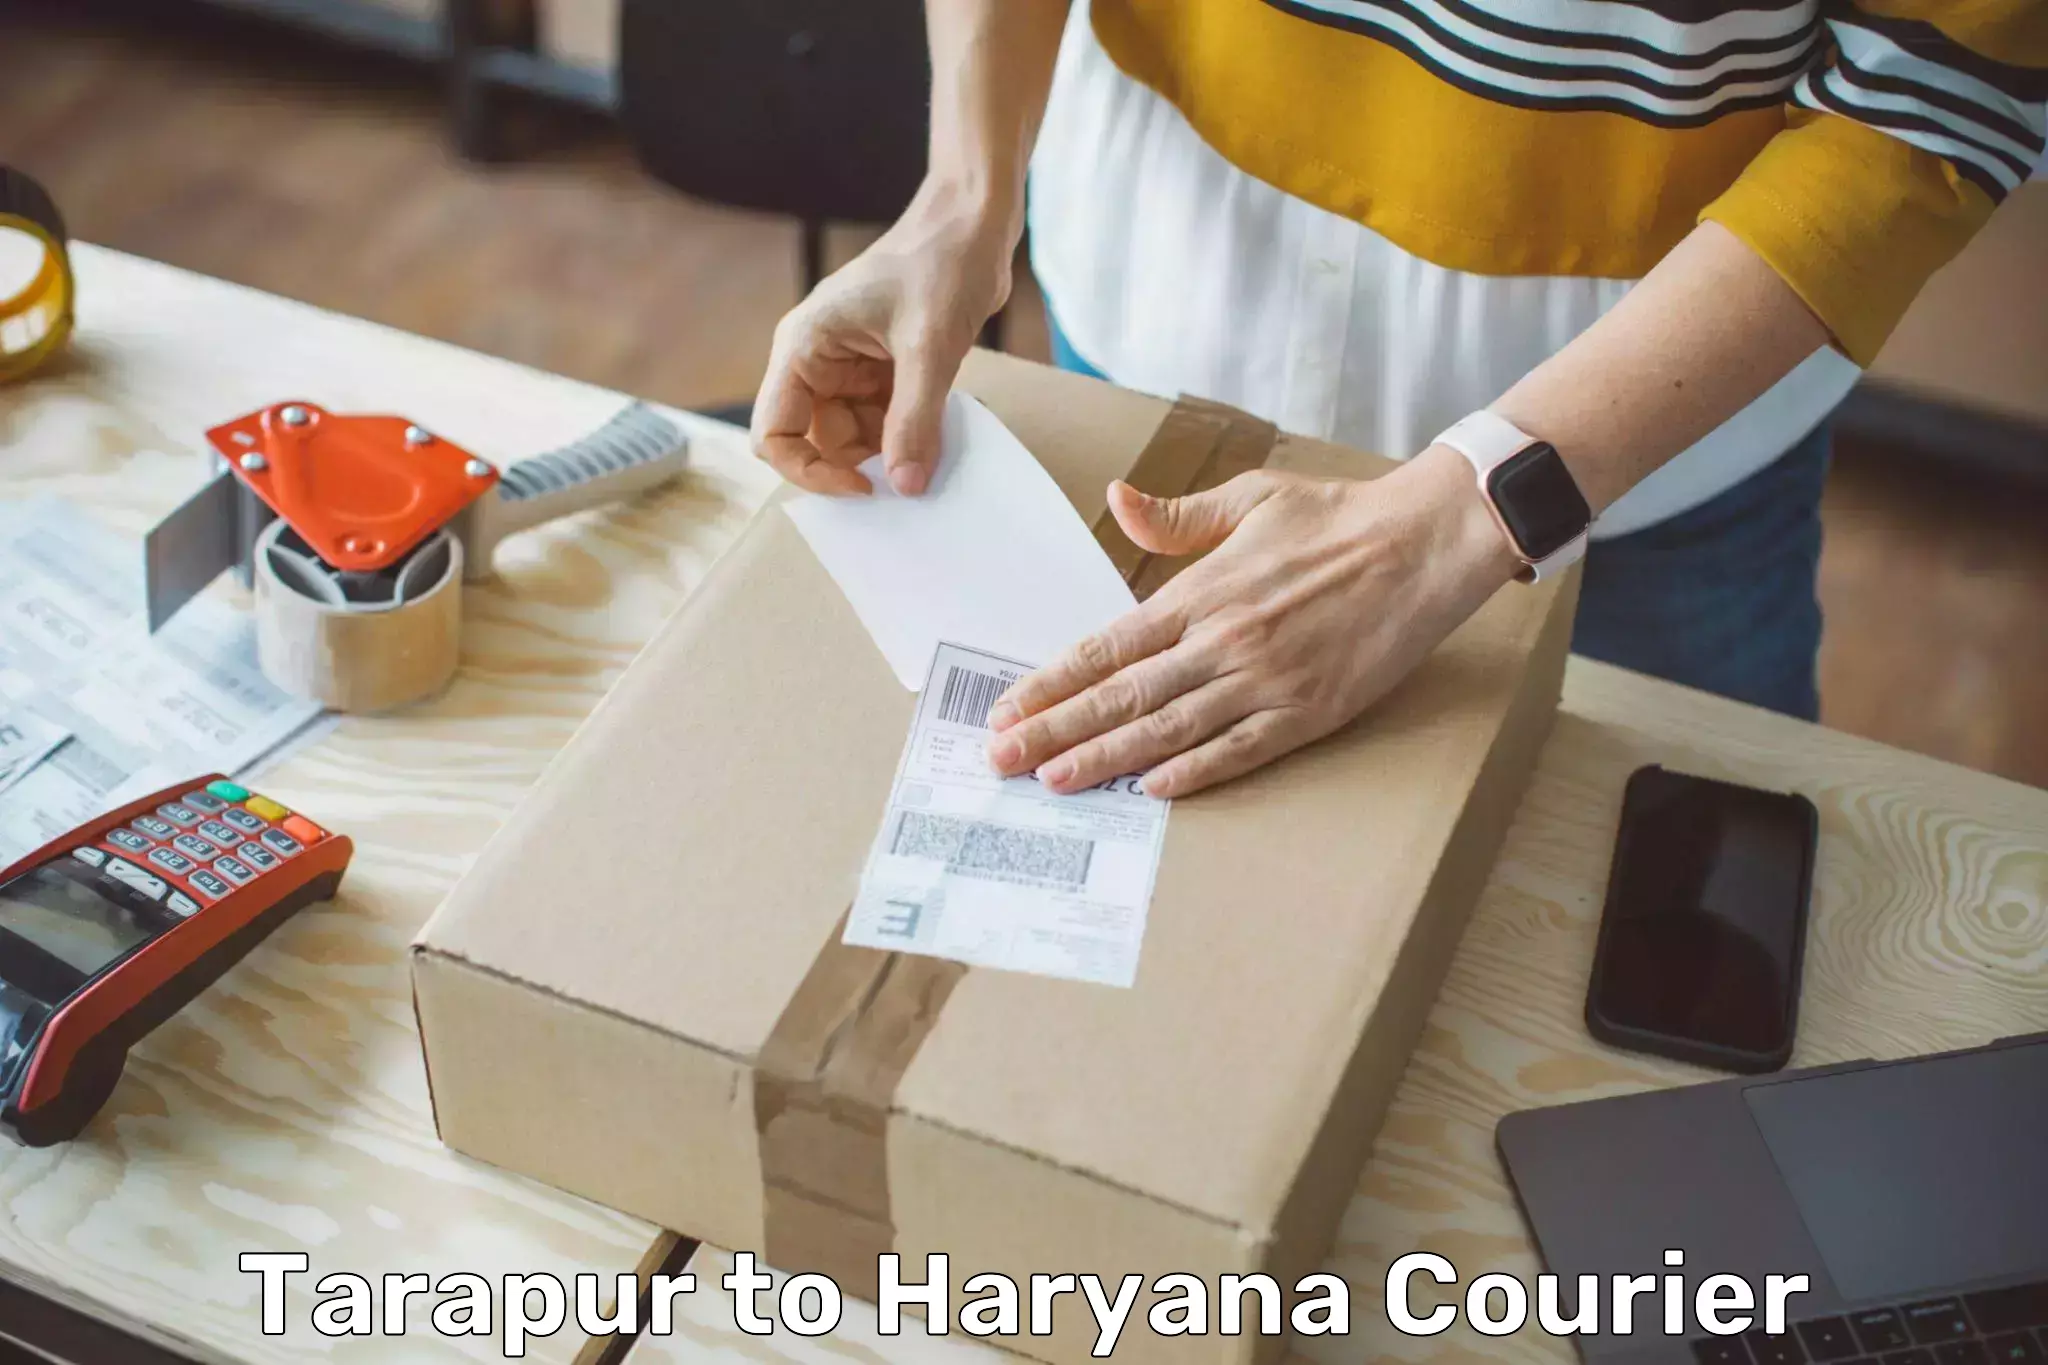 Package delivery network Tarapur to Kurukshetra